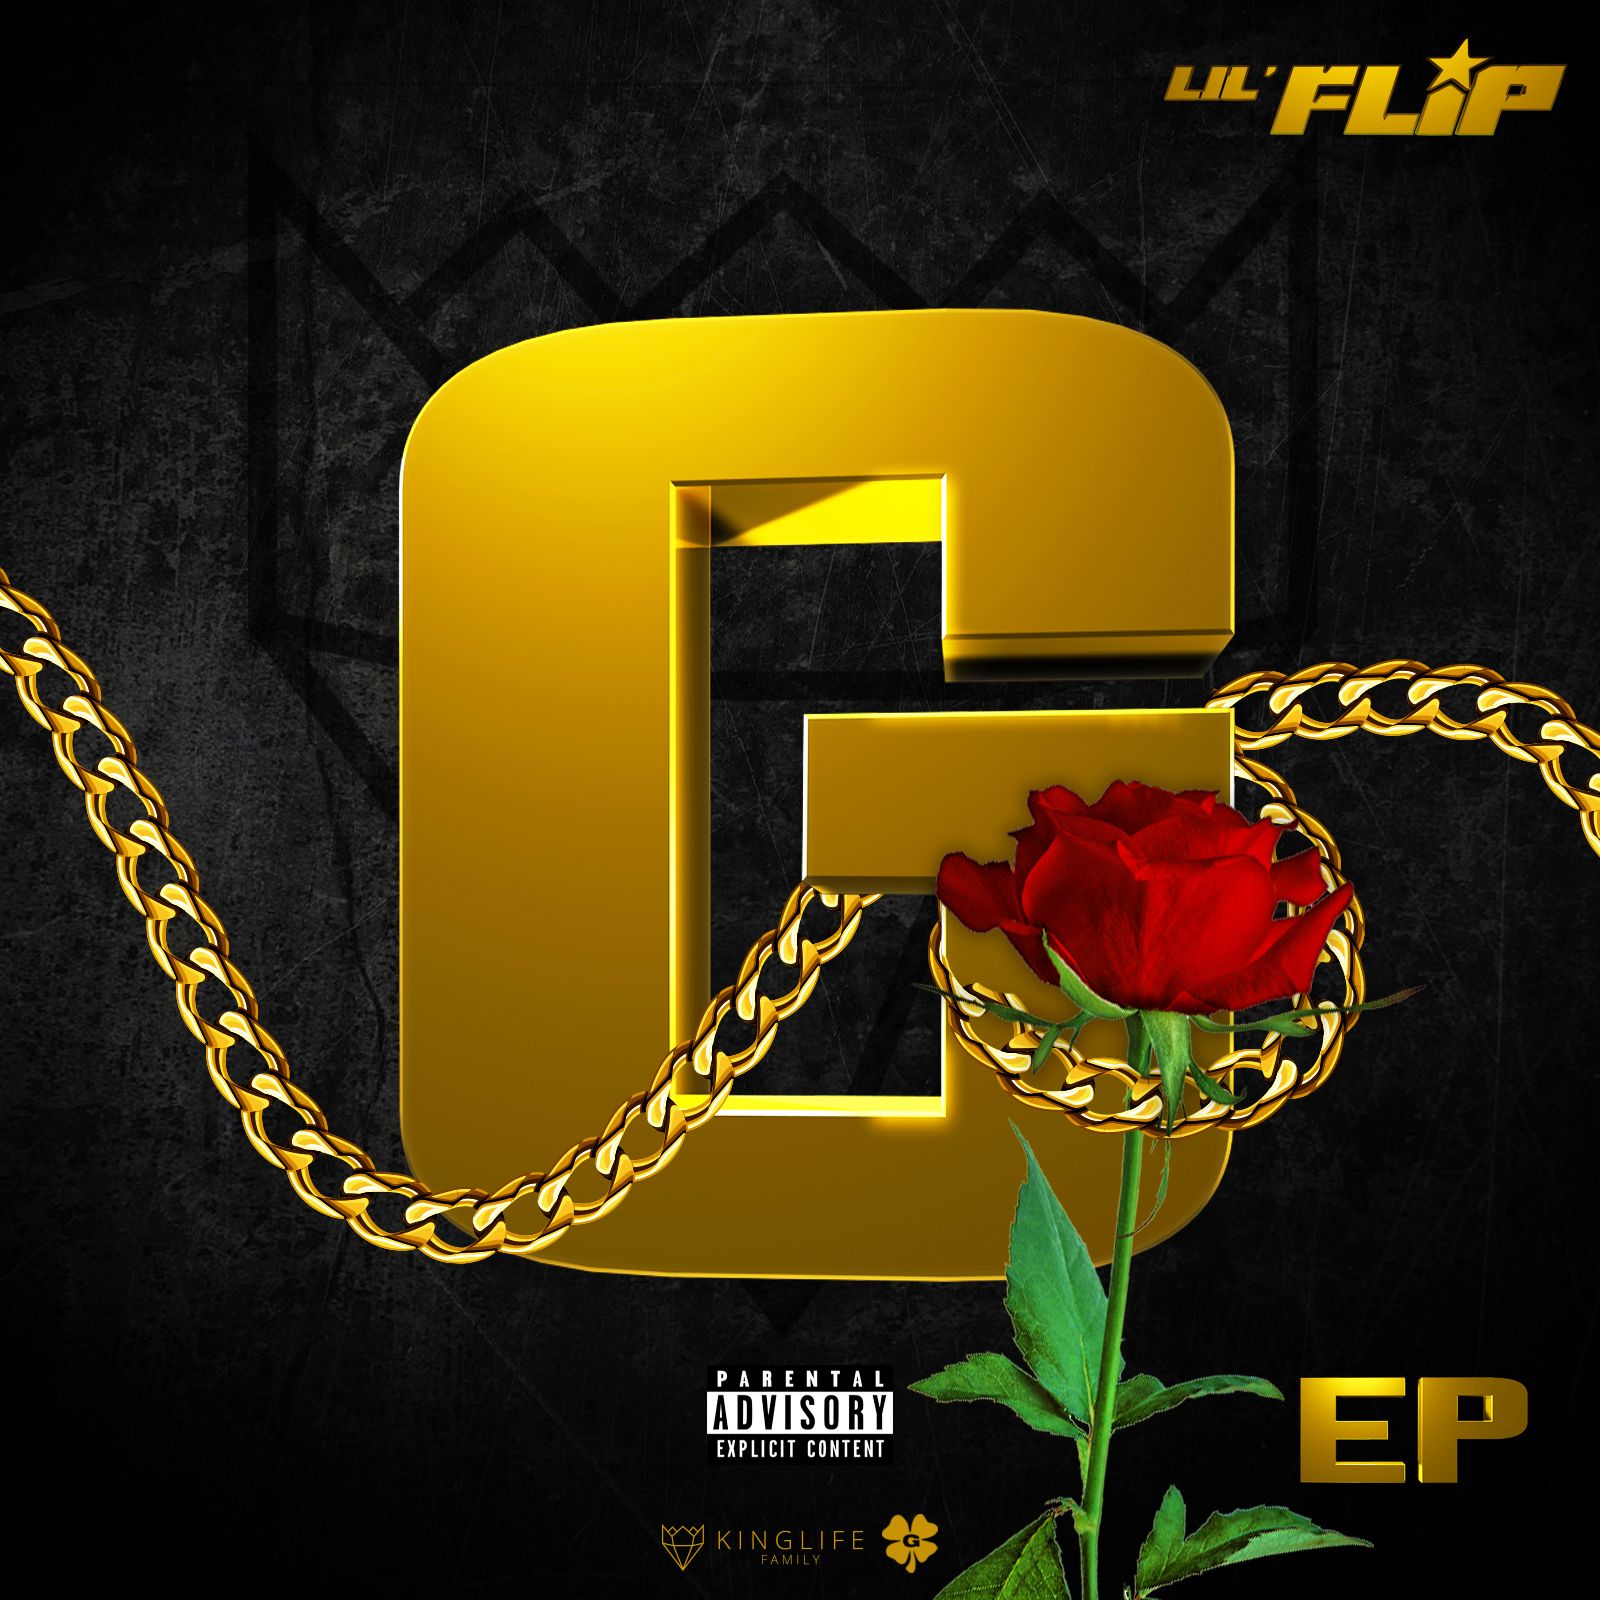 FLIP G EP COVERART (DIRTY).jpg